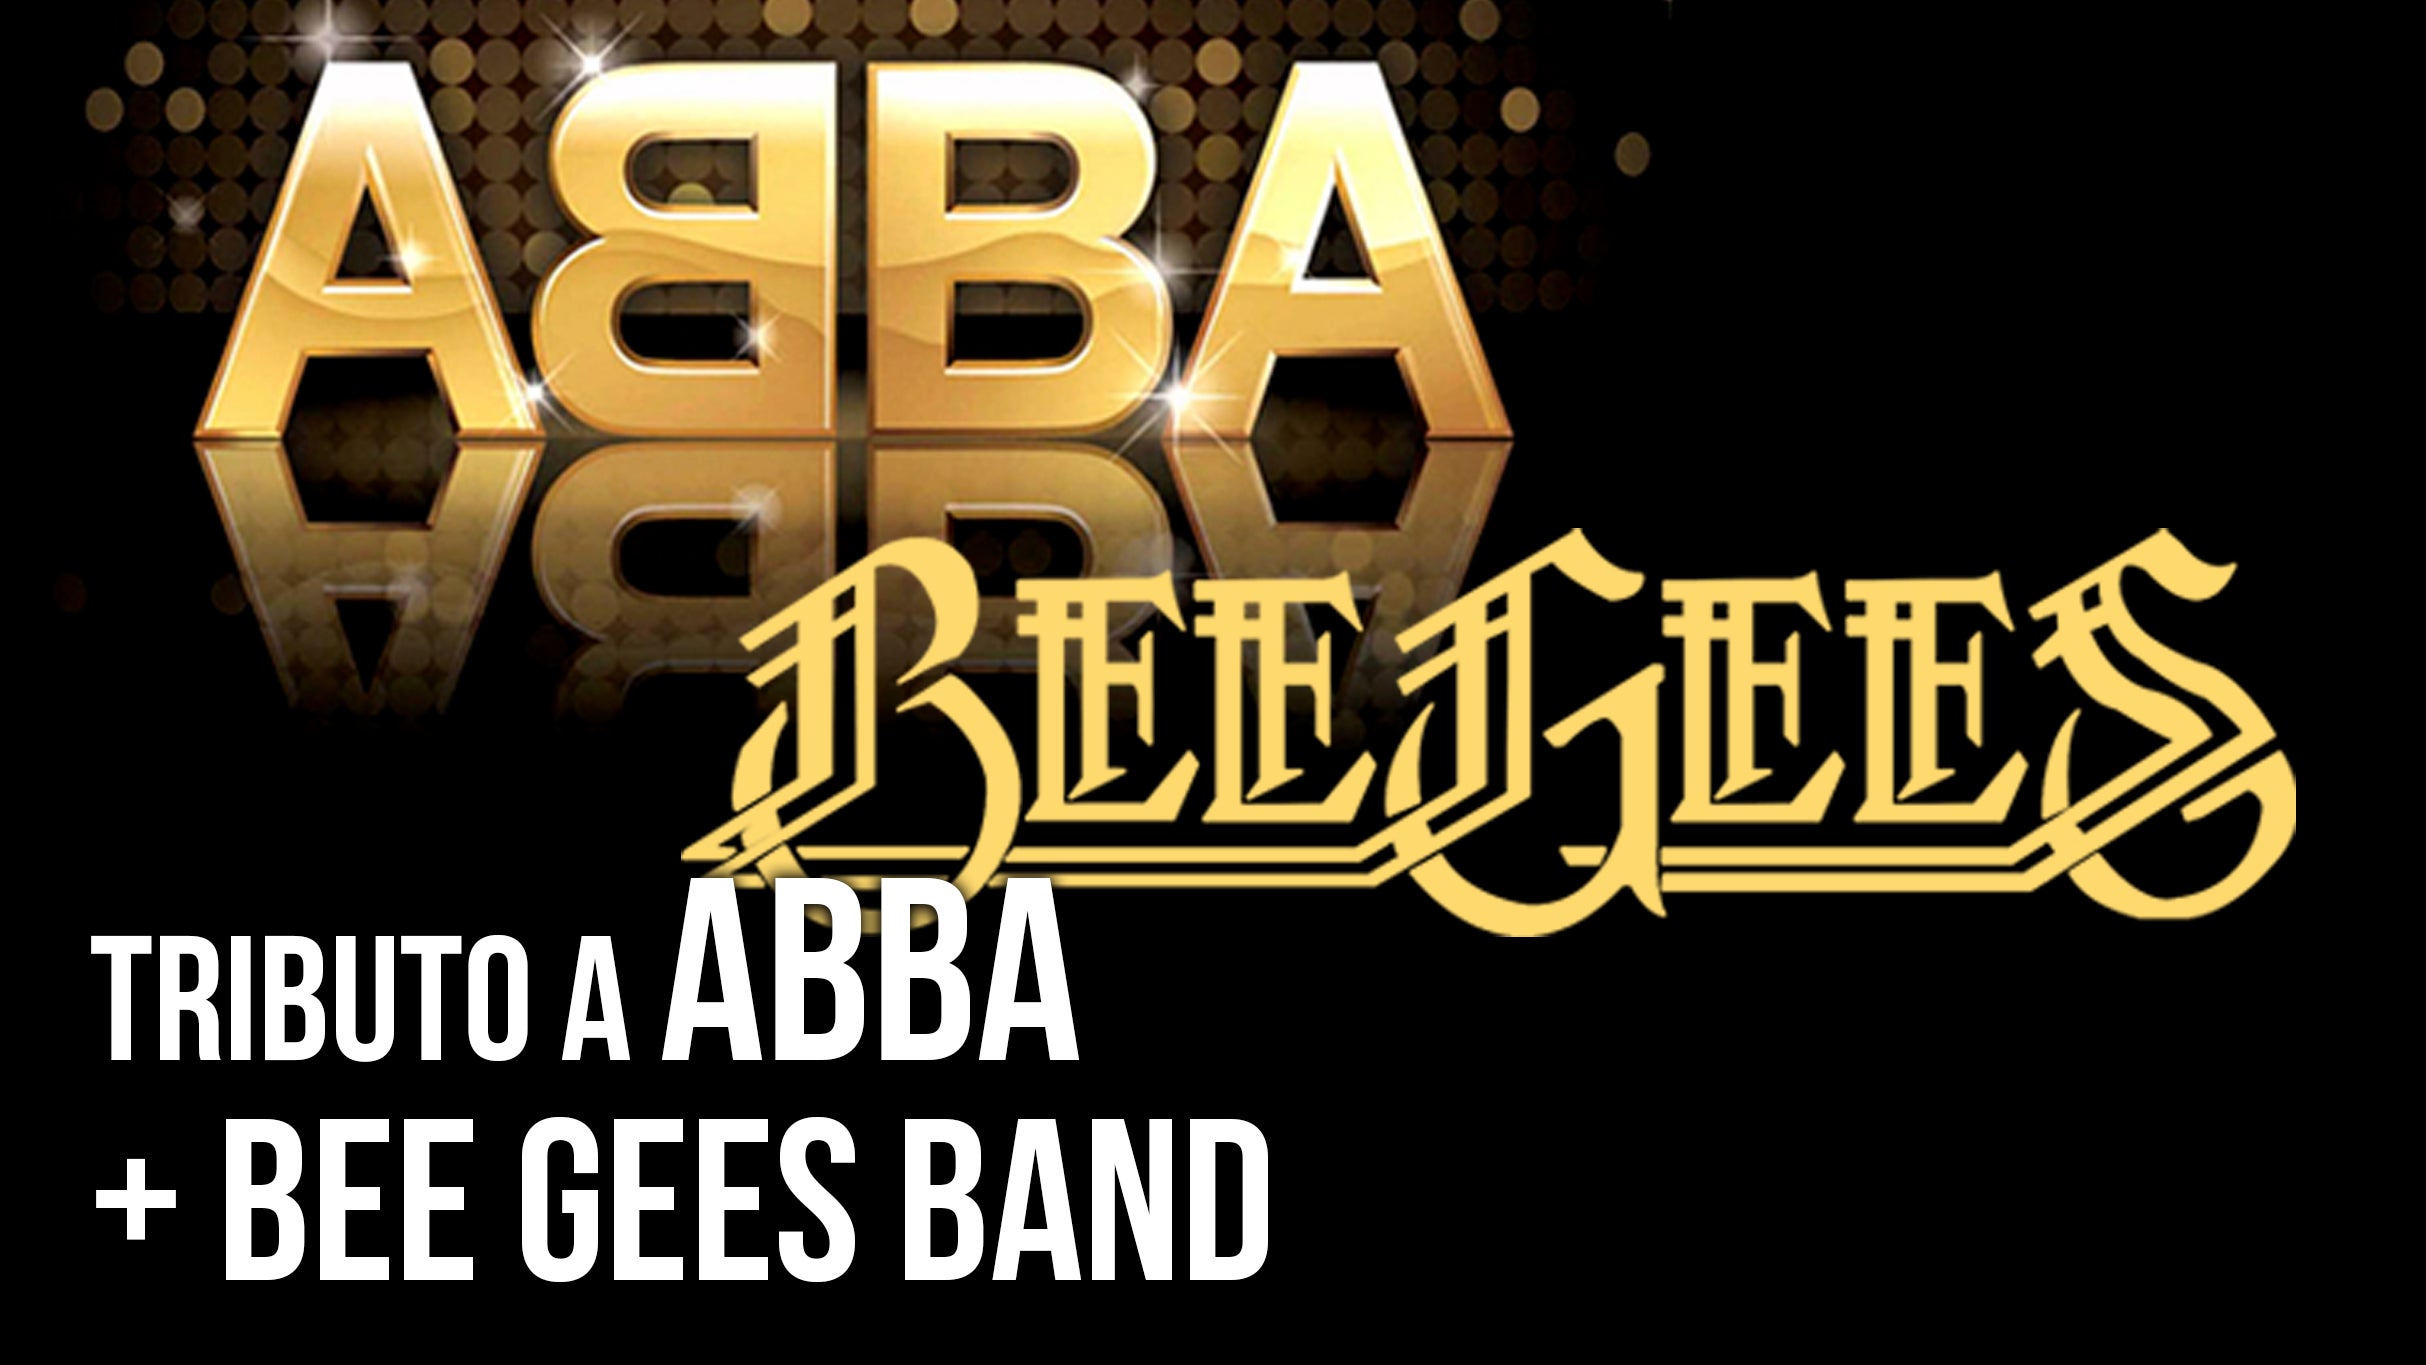 Tributo a ABBA y Bee Gees presale information on freepresalepasswords.com